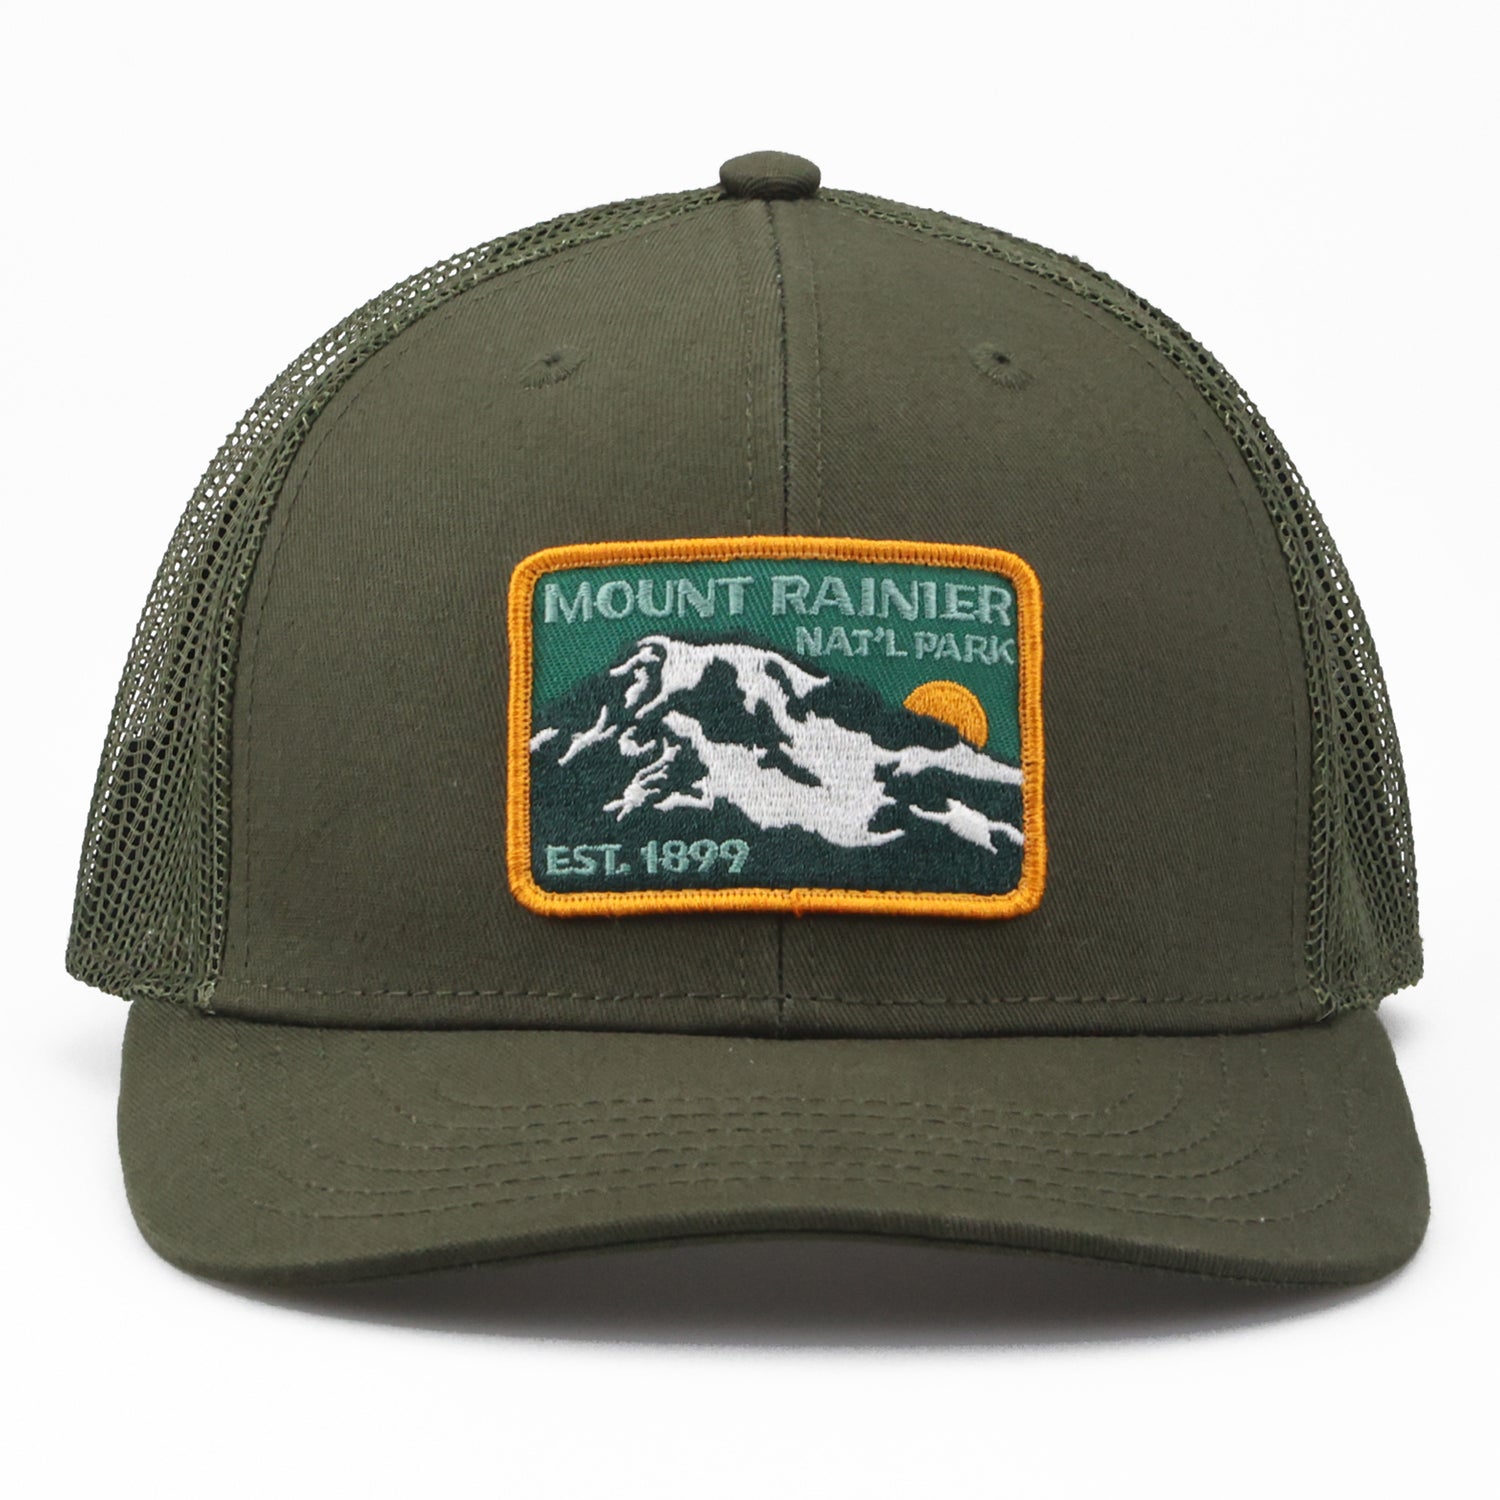 Mount Rainier Hats